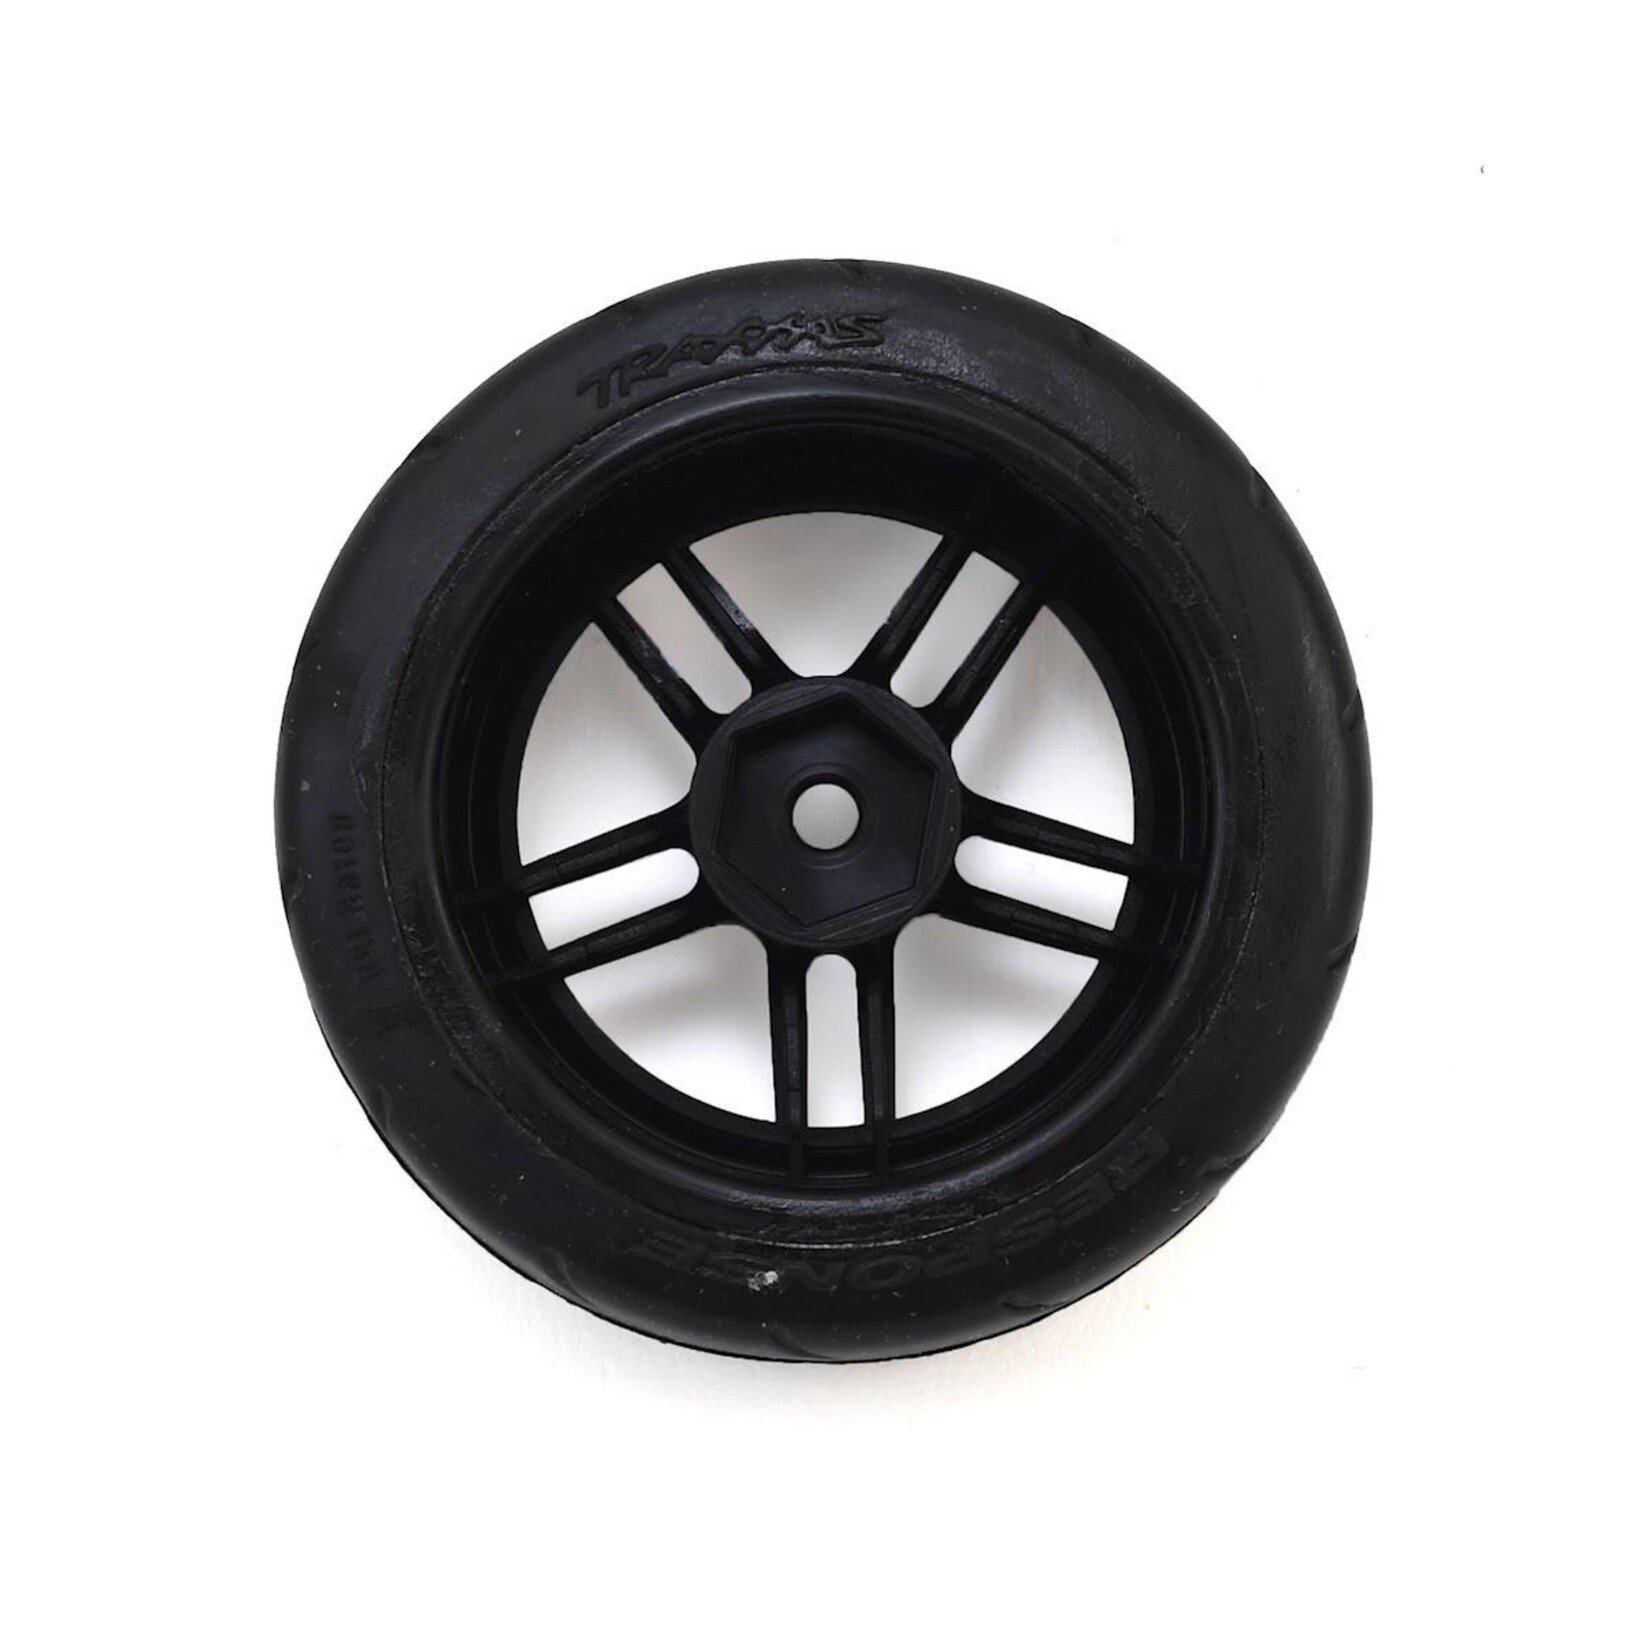 Traxxas Traxxas 4-Tec 2.0 1.9" Response Front & Rear Pre-Mounted Tires (Black Chrome) w/12mm Hex Split-Spoke Wheels (4) #8375